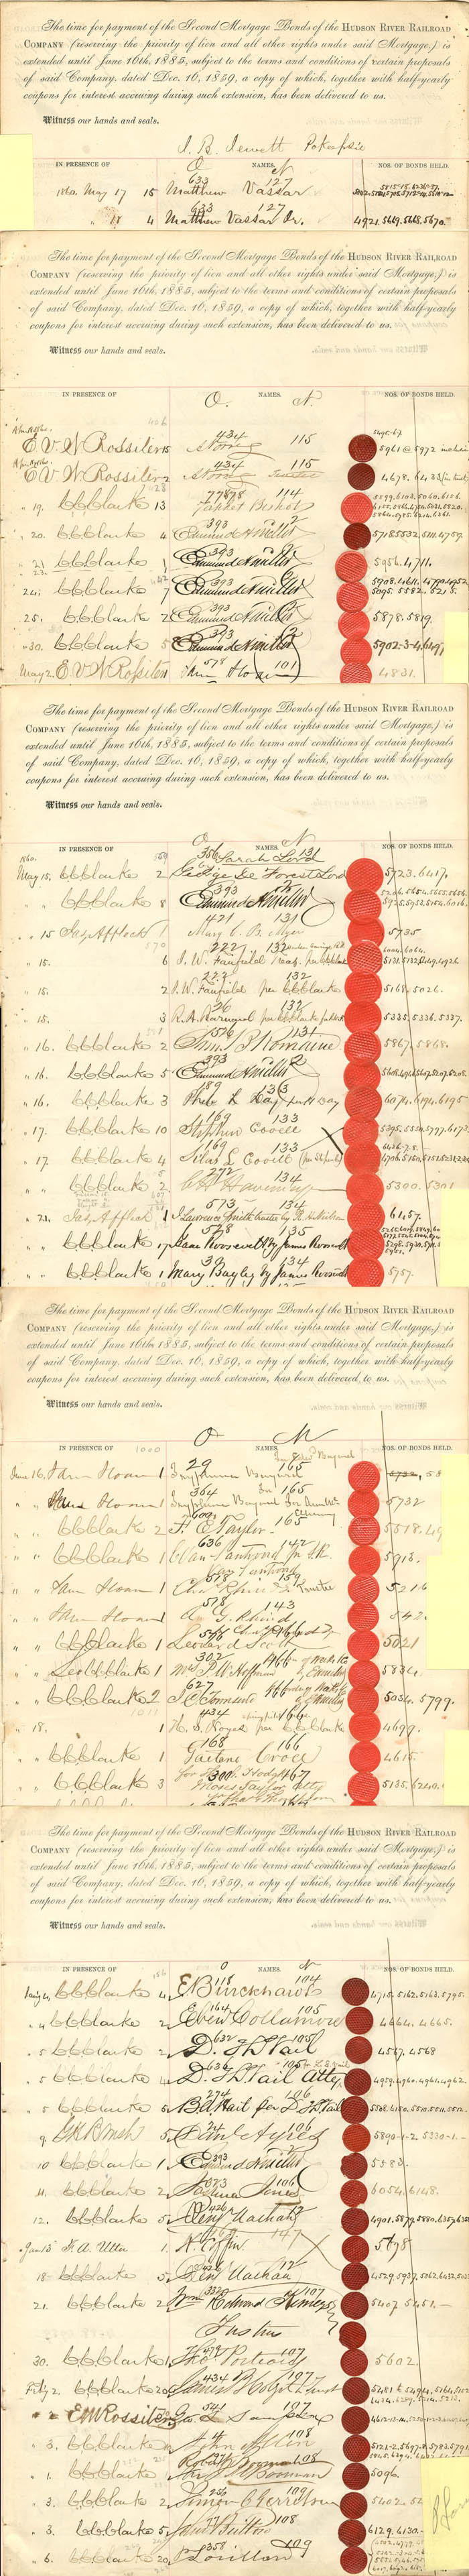 Hudson River Railroad Bond Receipt Sheet signed by Lorillard, Vassar, Sloan, Roosevelt, and Taylor